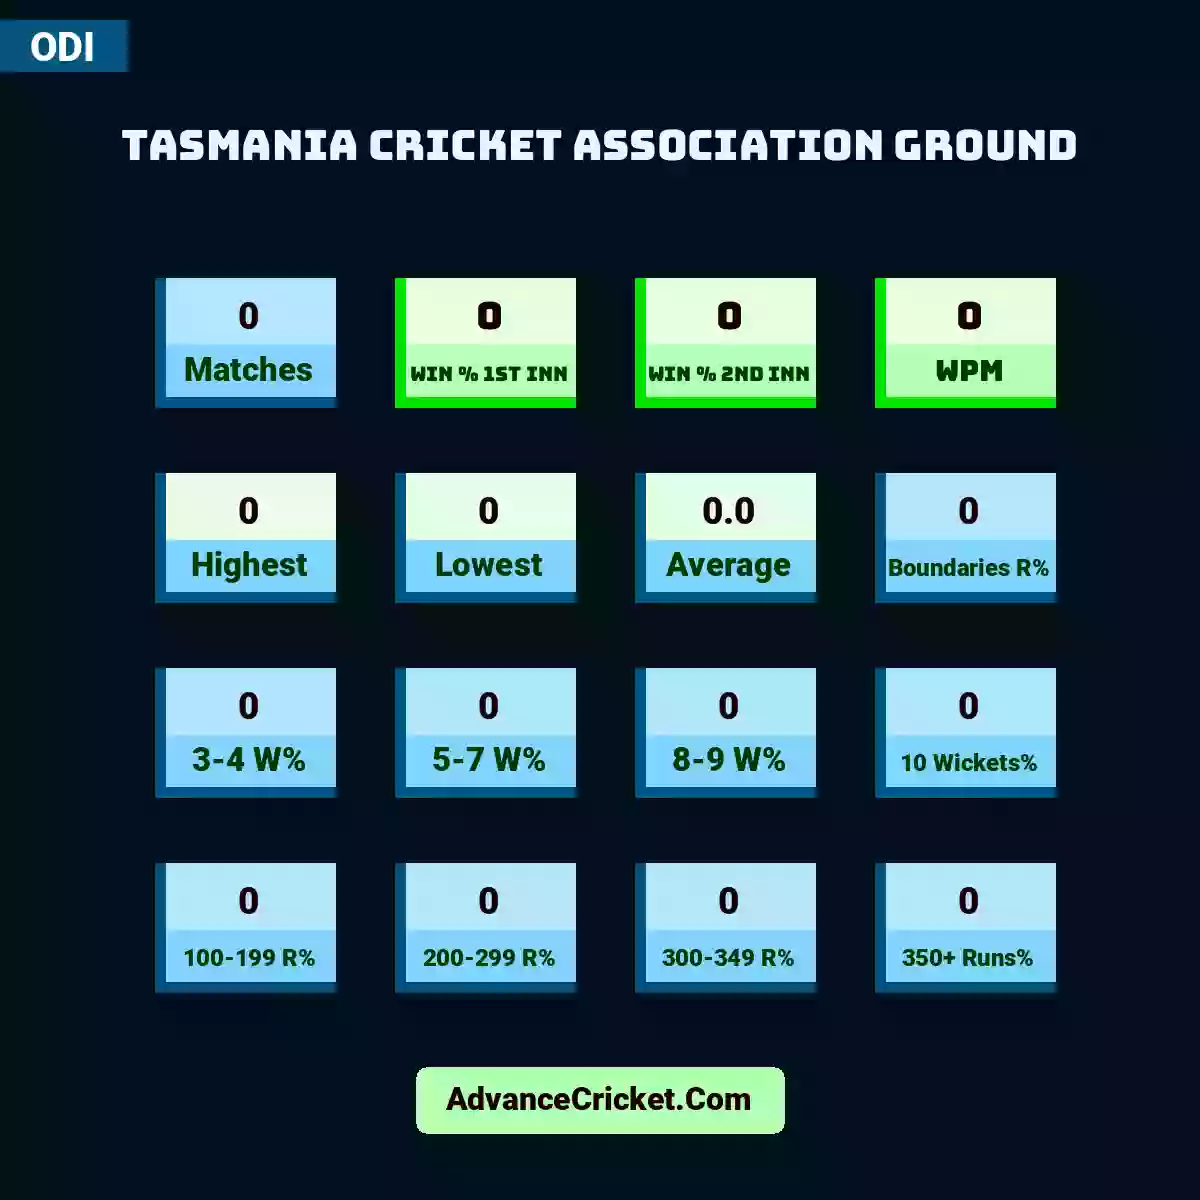 Image showing Tasmania Cricket Association Ground with Matches: 0, Win % 1st Inn: 0, Win % 2nd Inn: 0, WPM: 0, Highest: 0, Lowest: 0, Average: 0.0, Boundaries R%: 0, 3-4 W%: 0, 5-7 W%: 0, 8-9 W%: 0, 10 Wickets%: 0, 100-199 R%: 0, 200-299 R%: 0, 300-349 R%: 0, 350+ Runs%: 0.